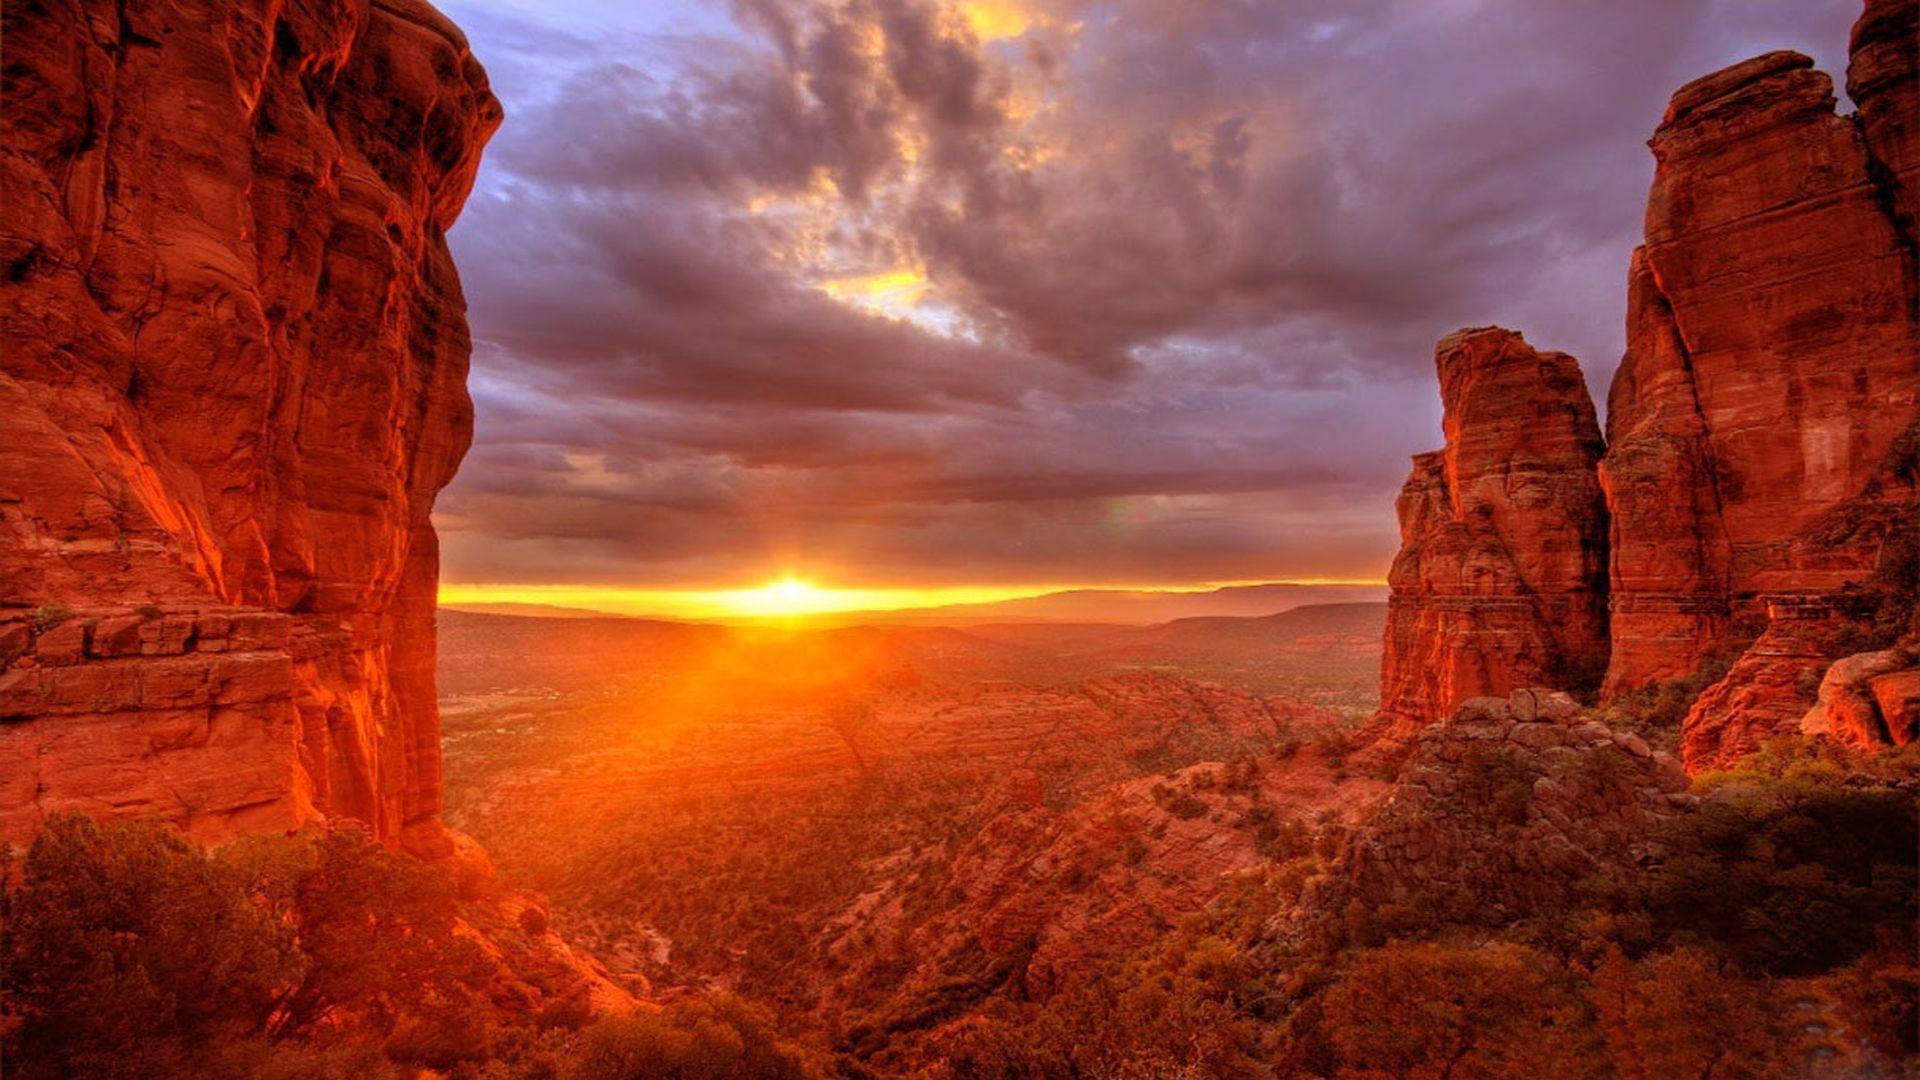 Wallpaper.wiki Beautiful Arizona Sunset Image Download PIC